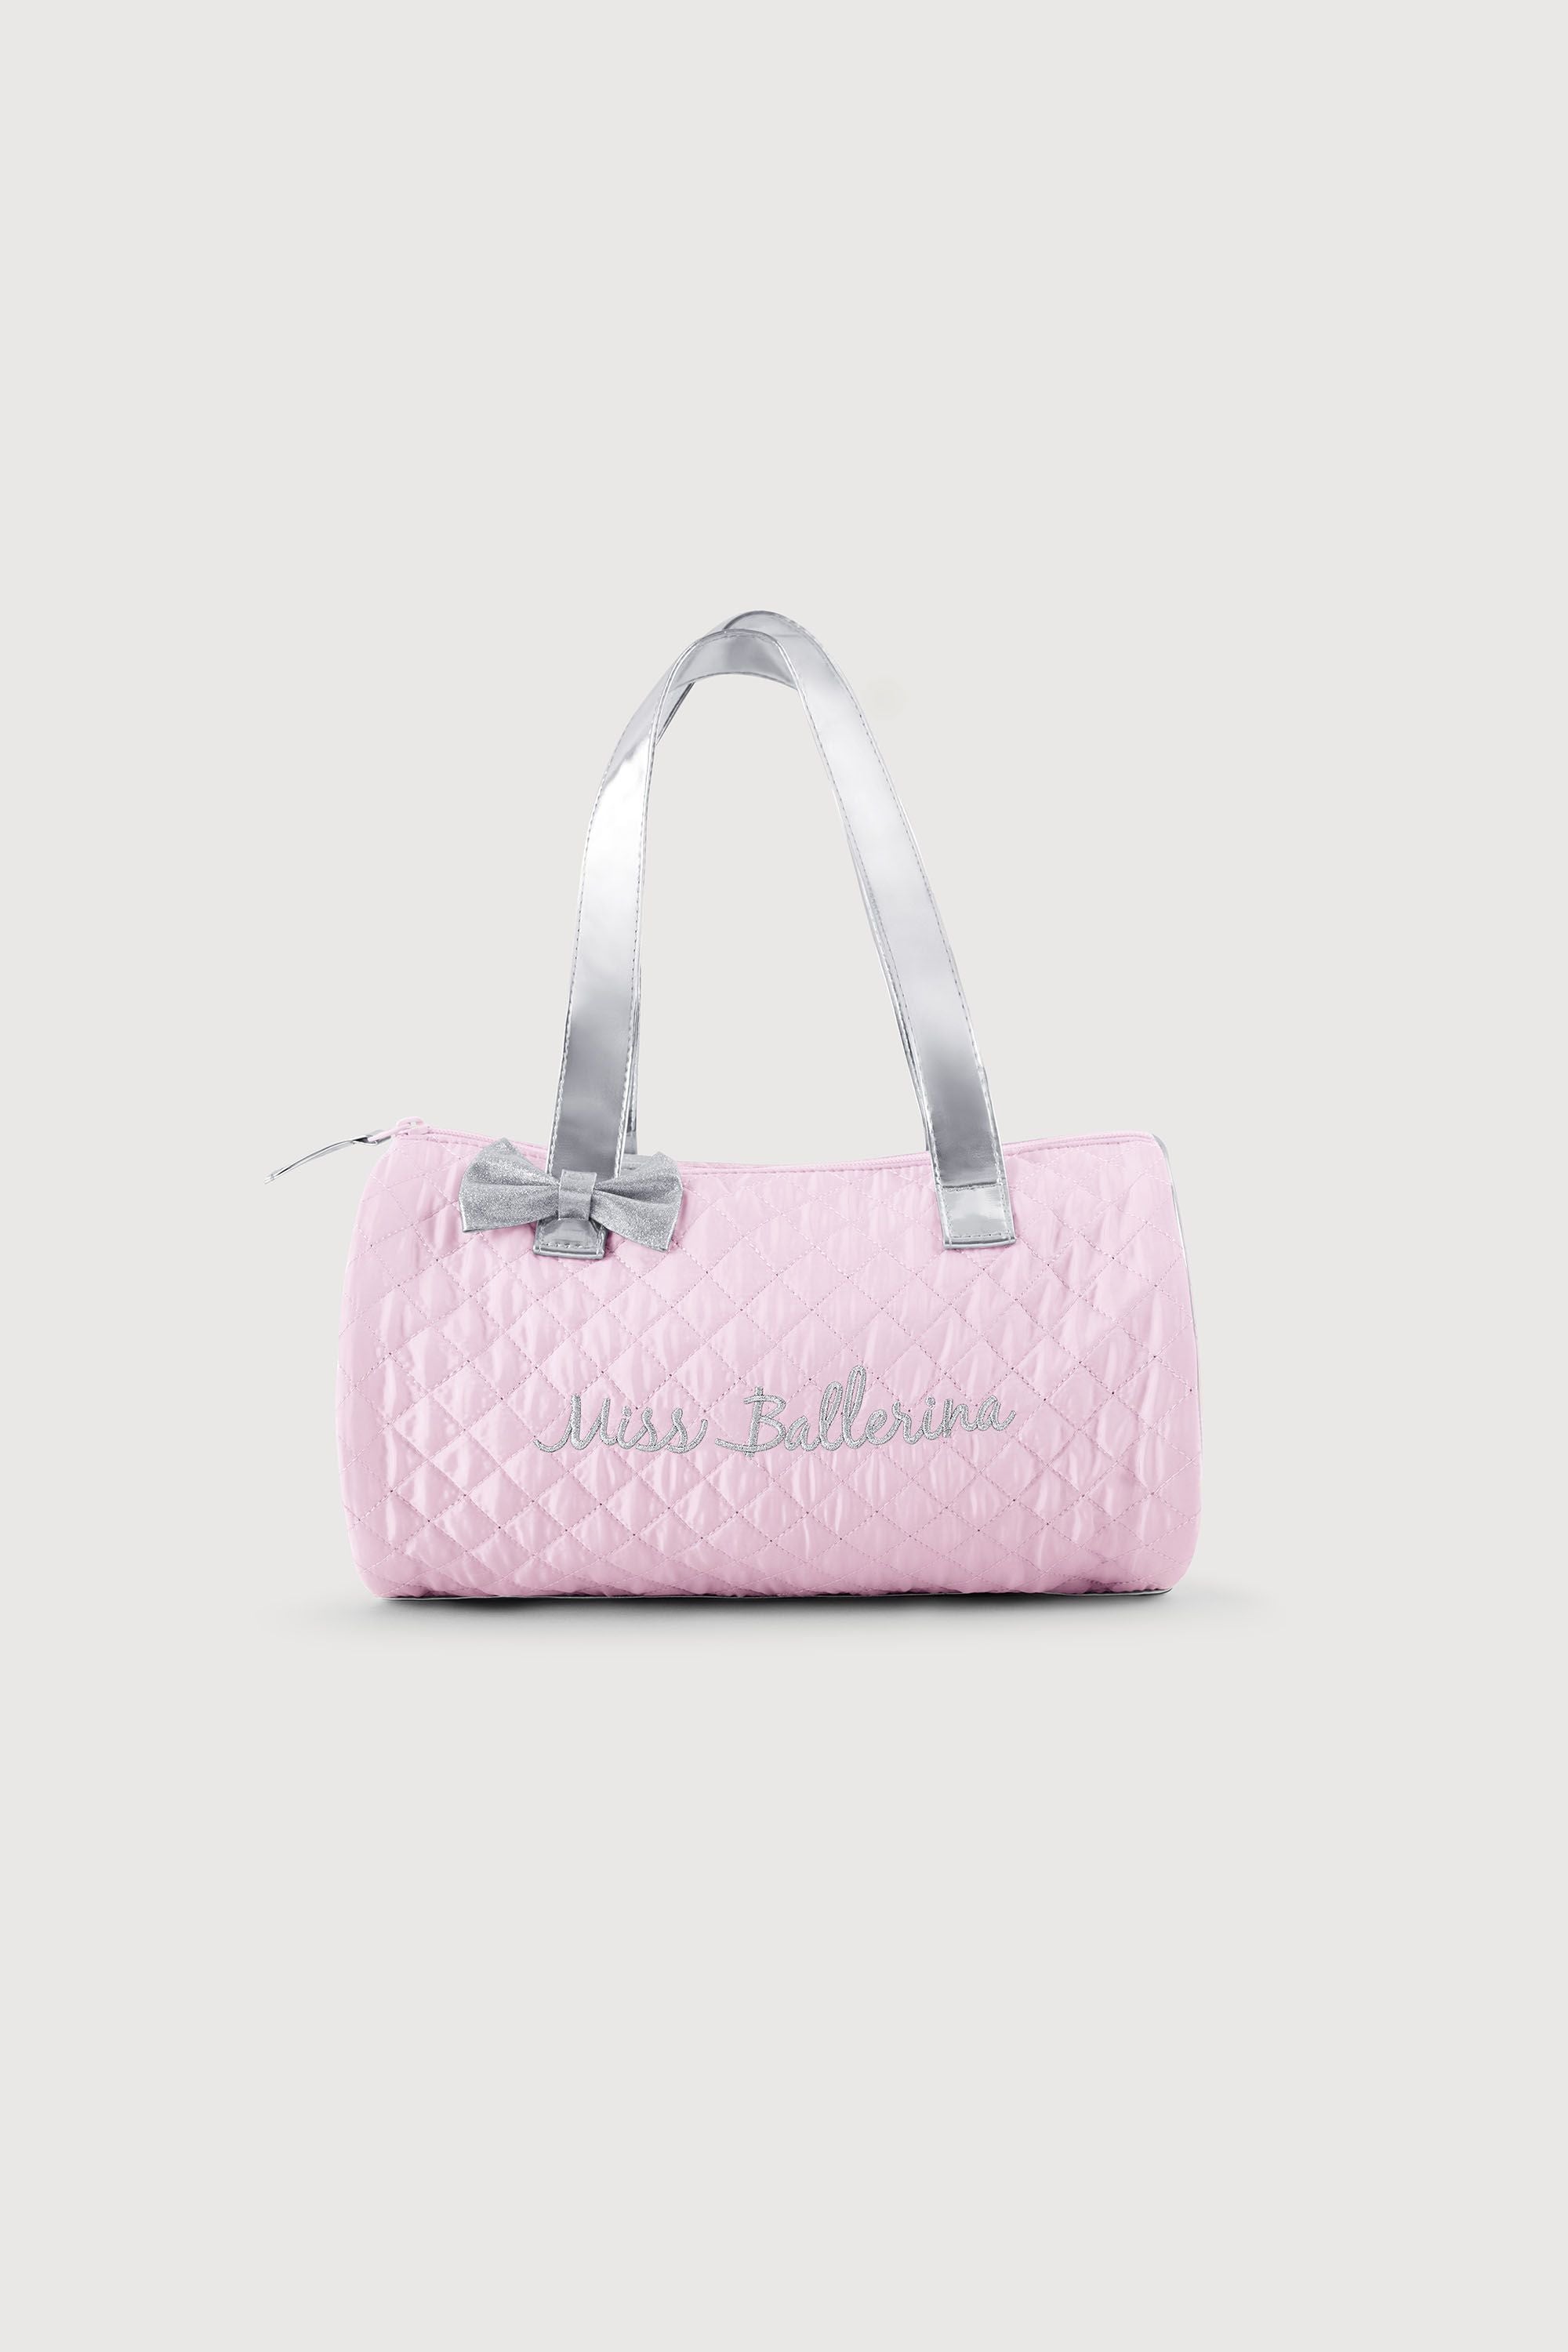 Bloch Miss Ballerina Dance Bag, Candy Pink Nylon